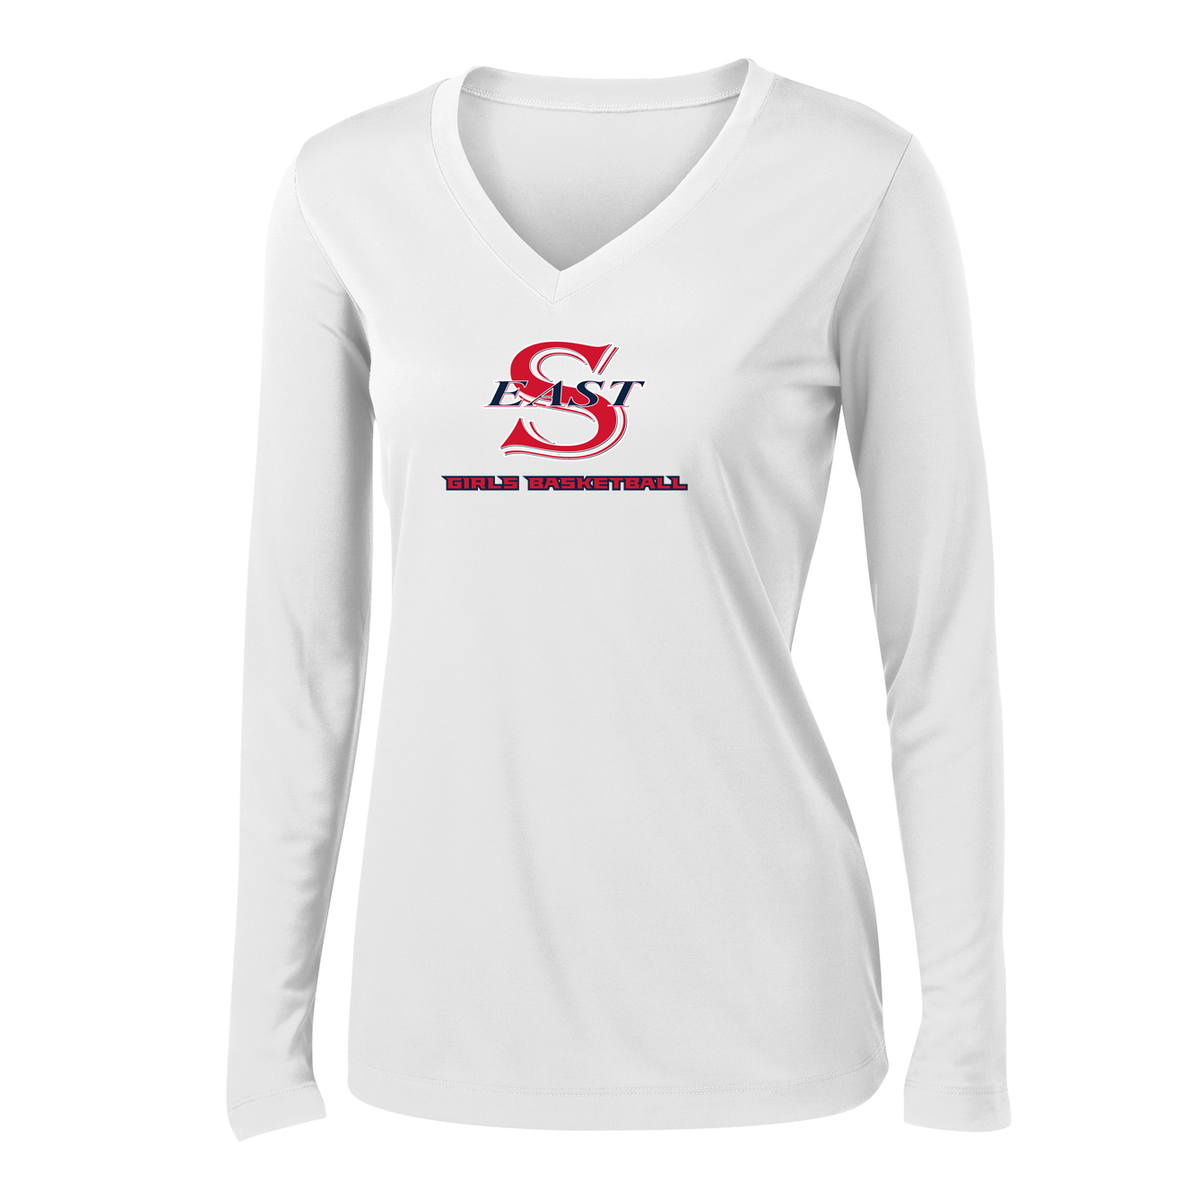 Smithtown East Girls Basketball Women's Long Sleeve Performance Shirt